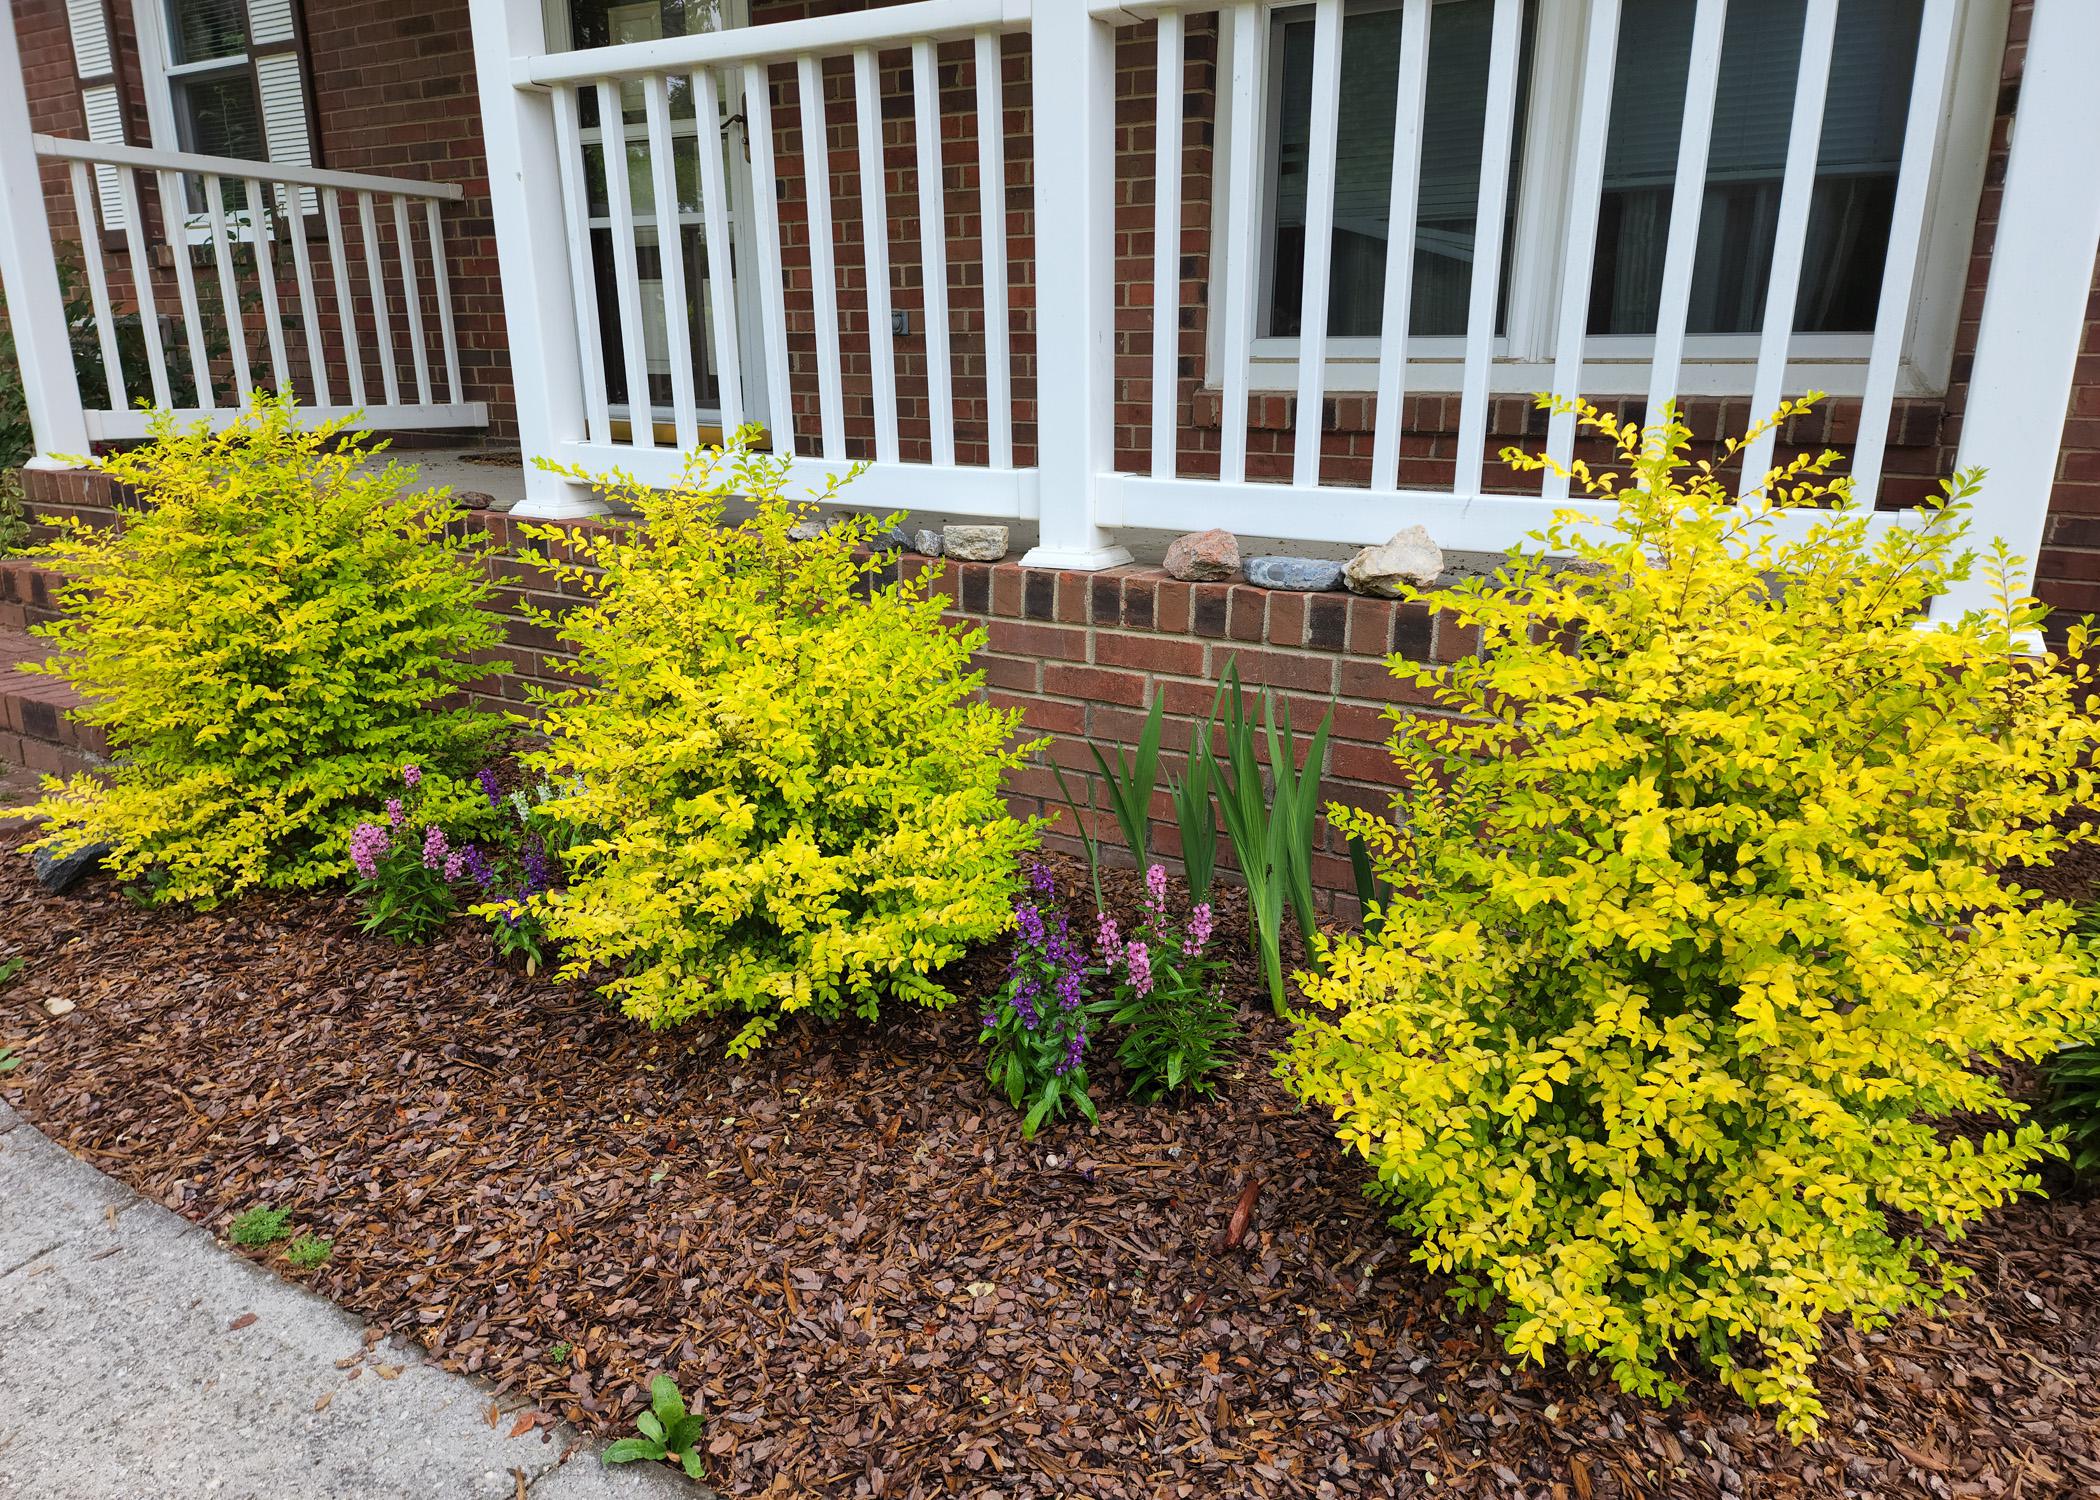 Three yellow shrubs grow in front of white railing.